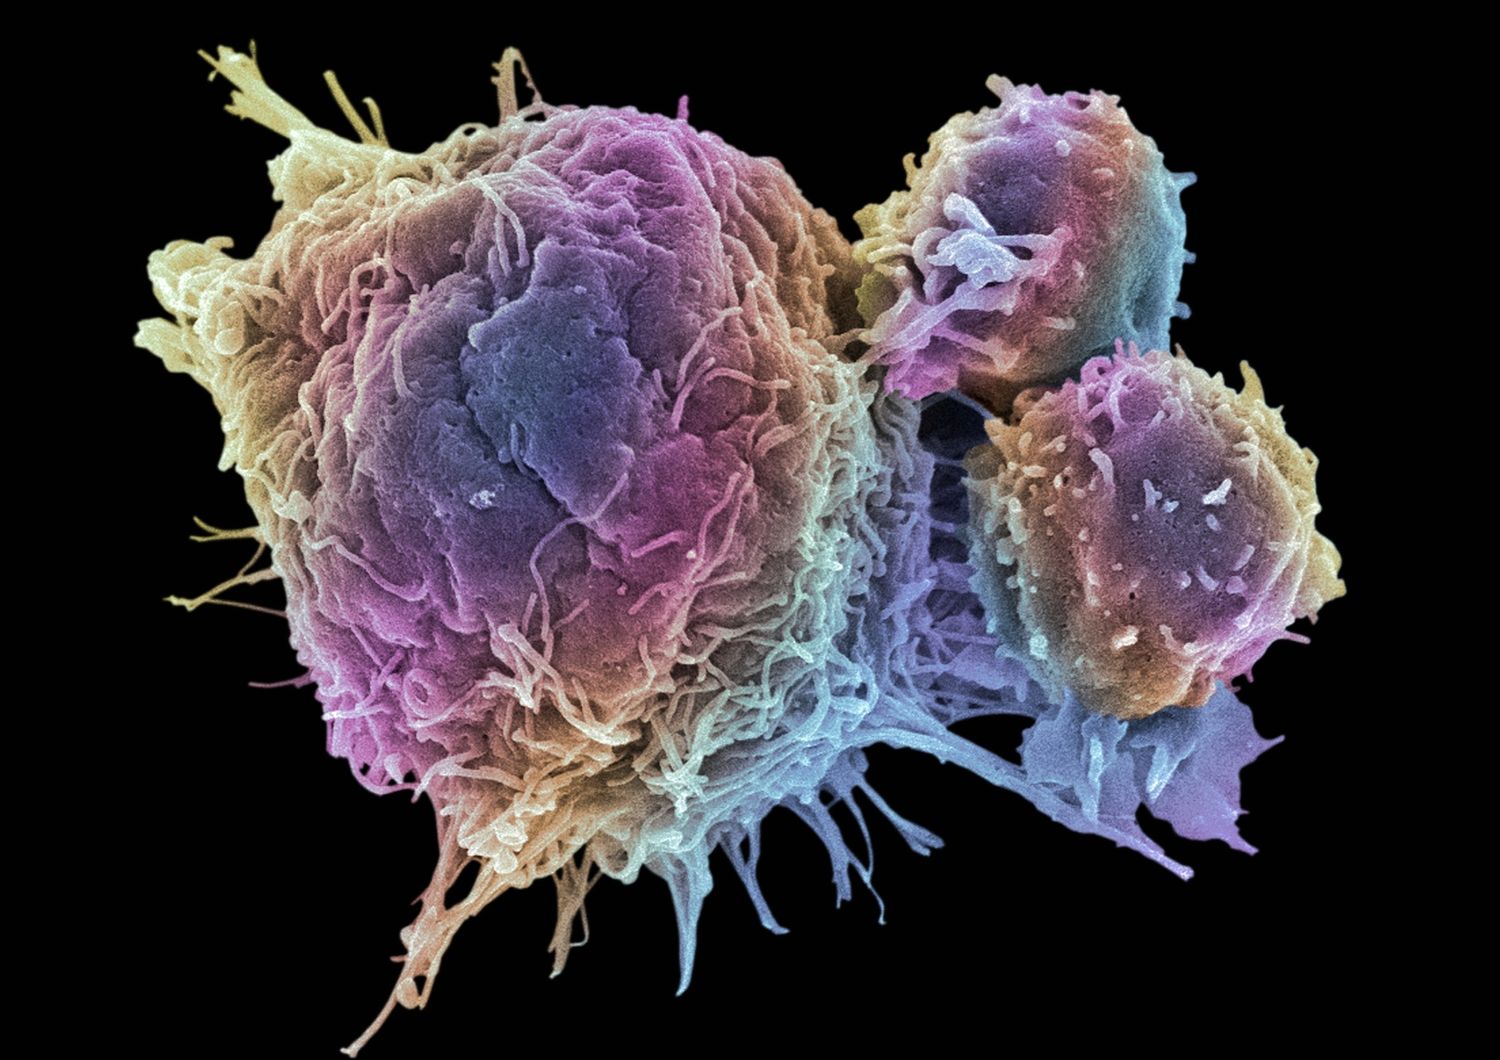 Cellule tumorali - Afp